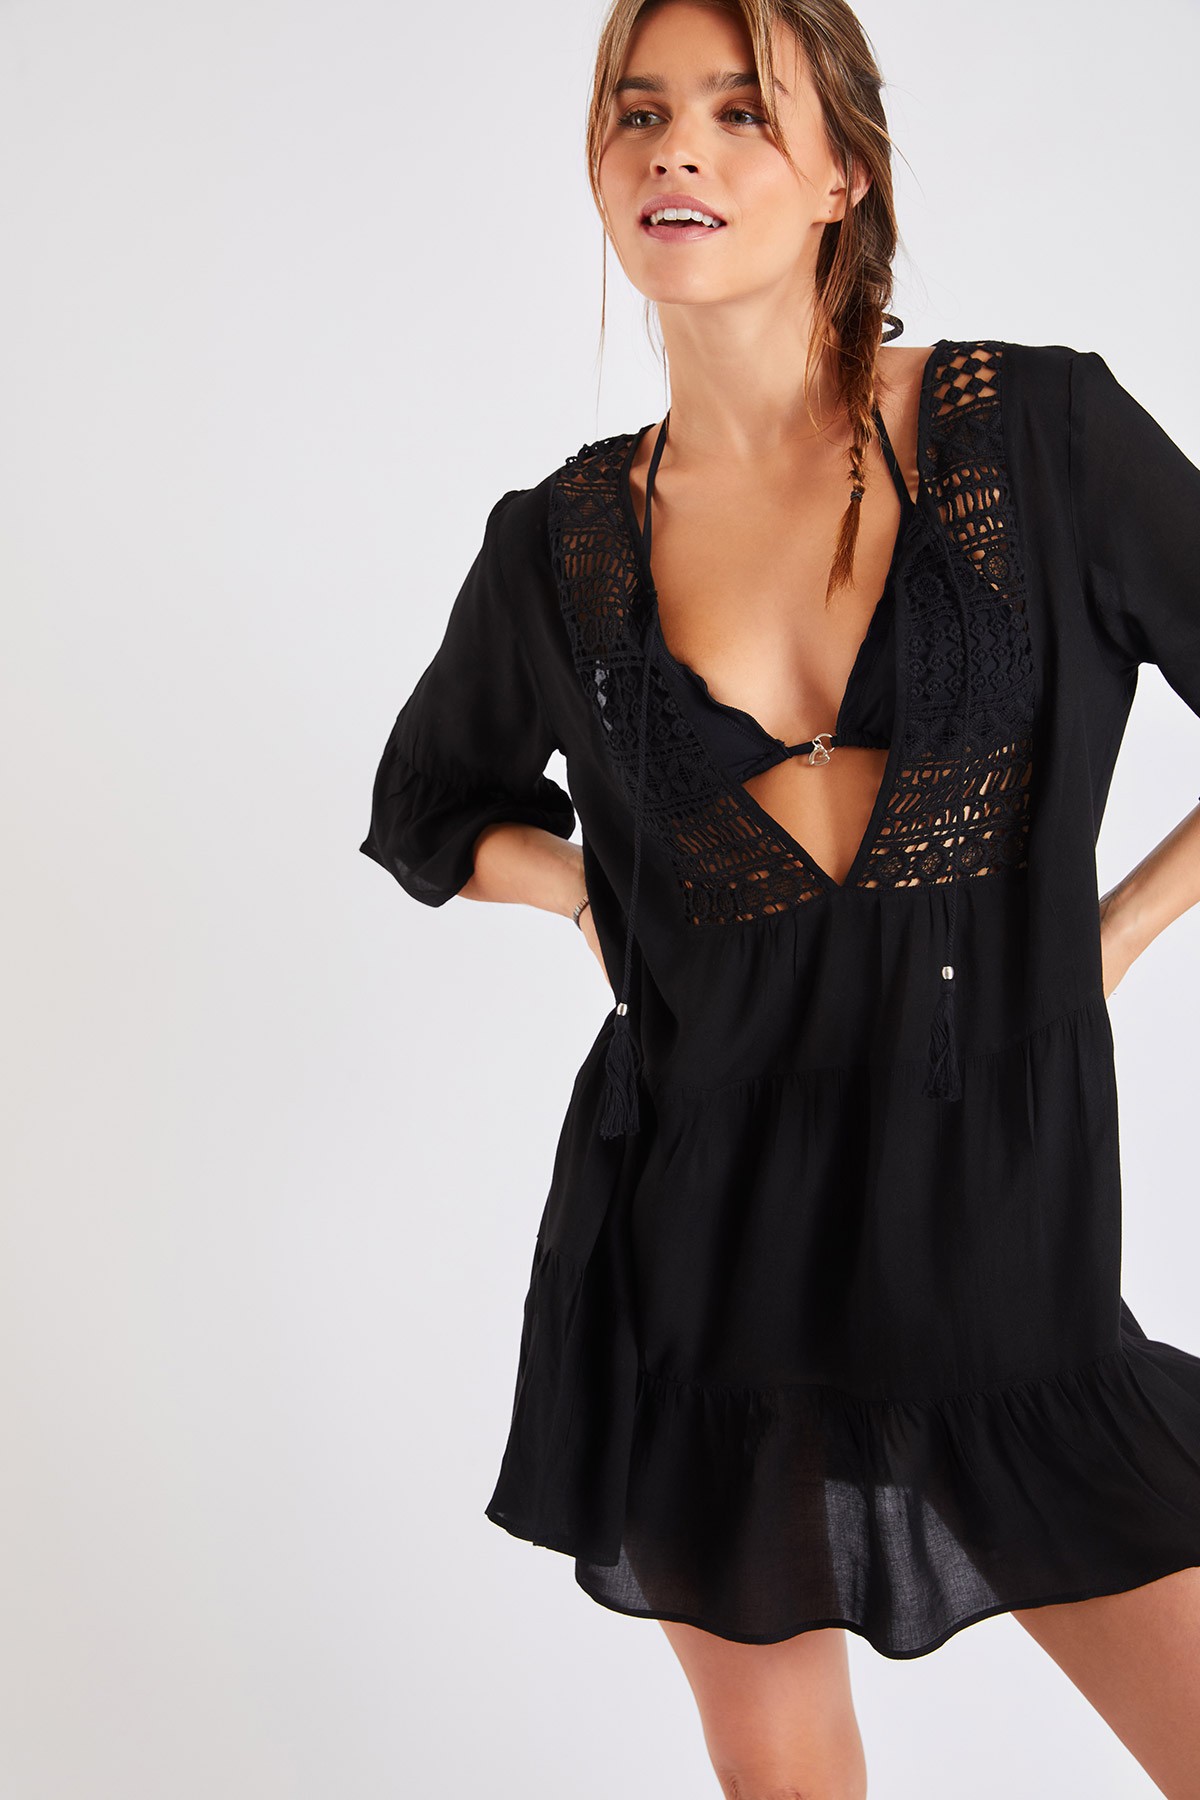 Interactie galblaas Verstikkend Zwarte beachwear tuniek Louise Salty | Banana Moon®